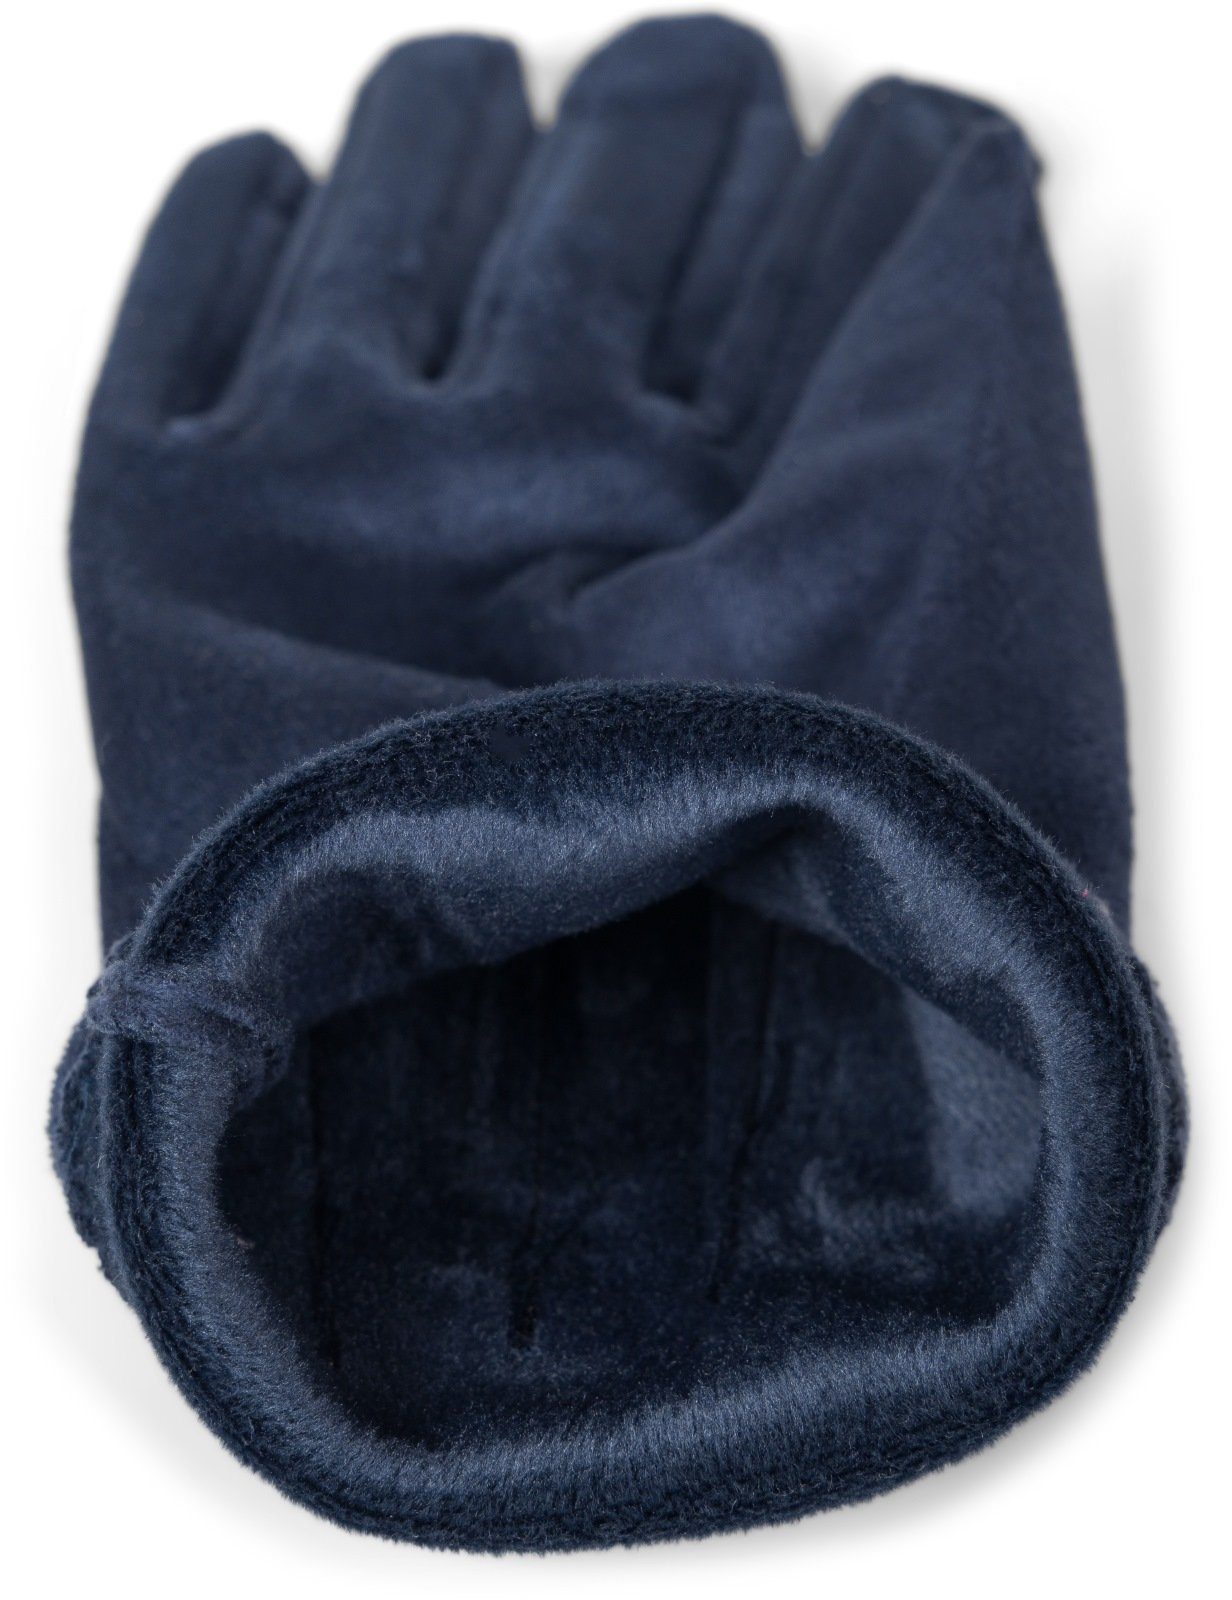 styleBREAKER Fleecehandschuhe Einfarbige Touchscreen Handschuhe Ziernähte Dunkelblau